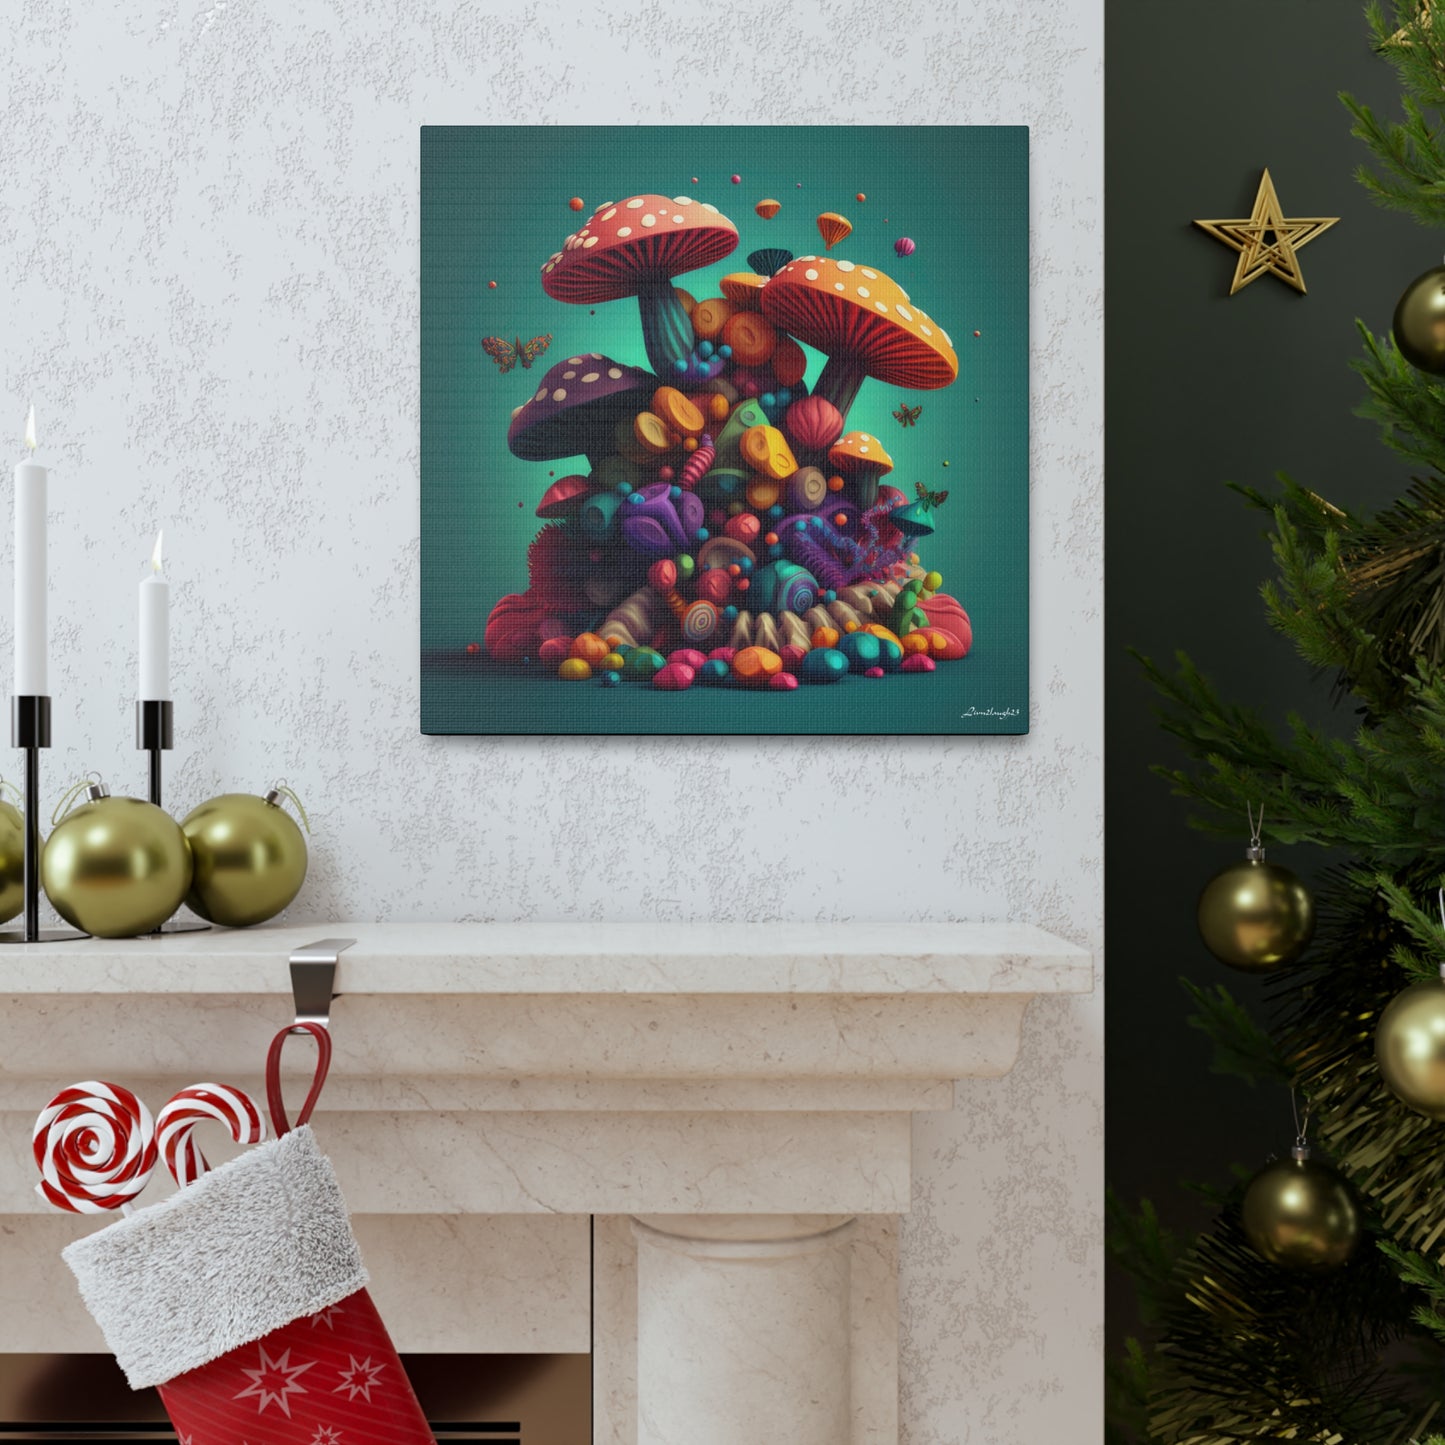 Beautiful Mushroom Luminating Colorful Bliss7 Canvas Gallery Wraps